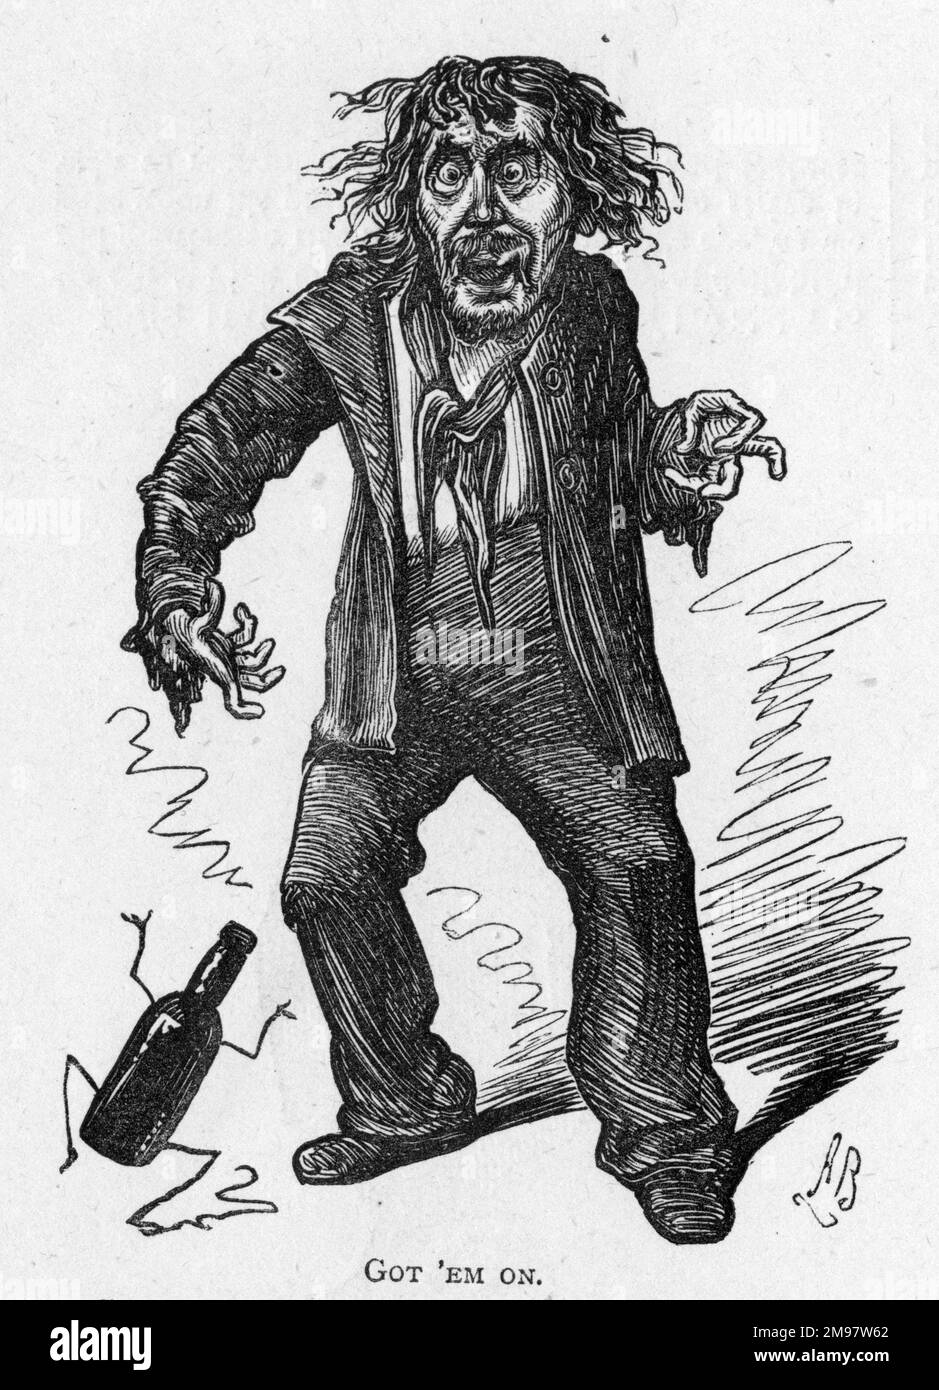 Caricatura del actor inglés Charles Warner, en el papel de un borracho. Foto de stock